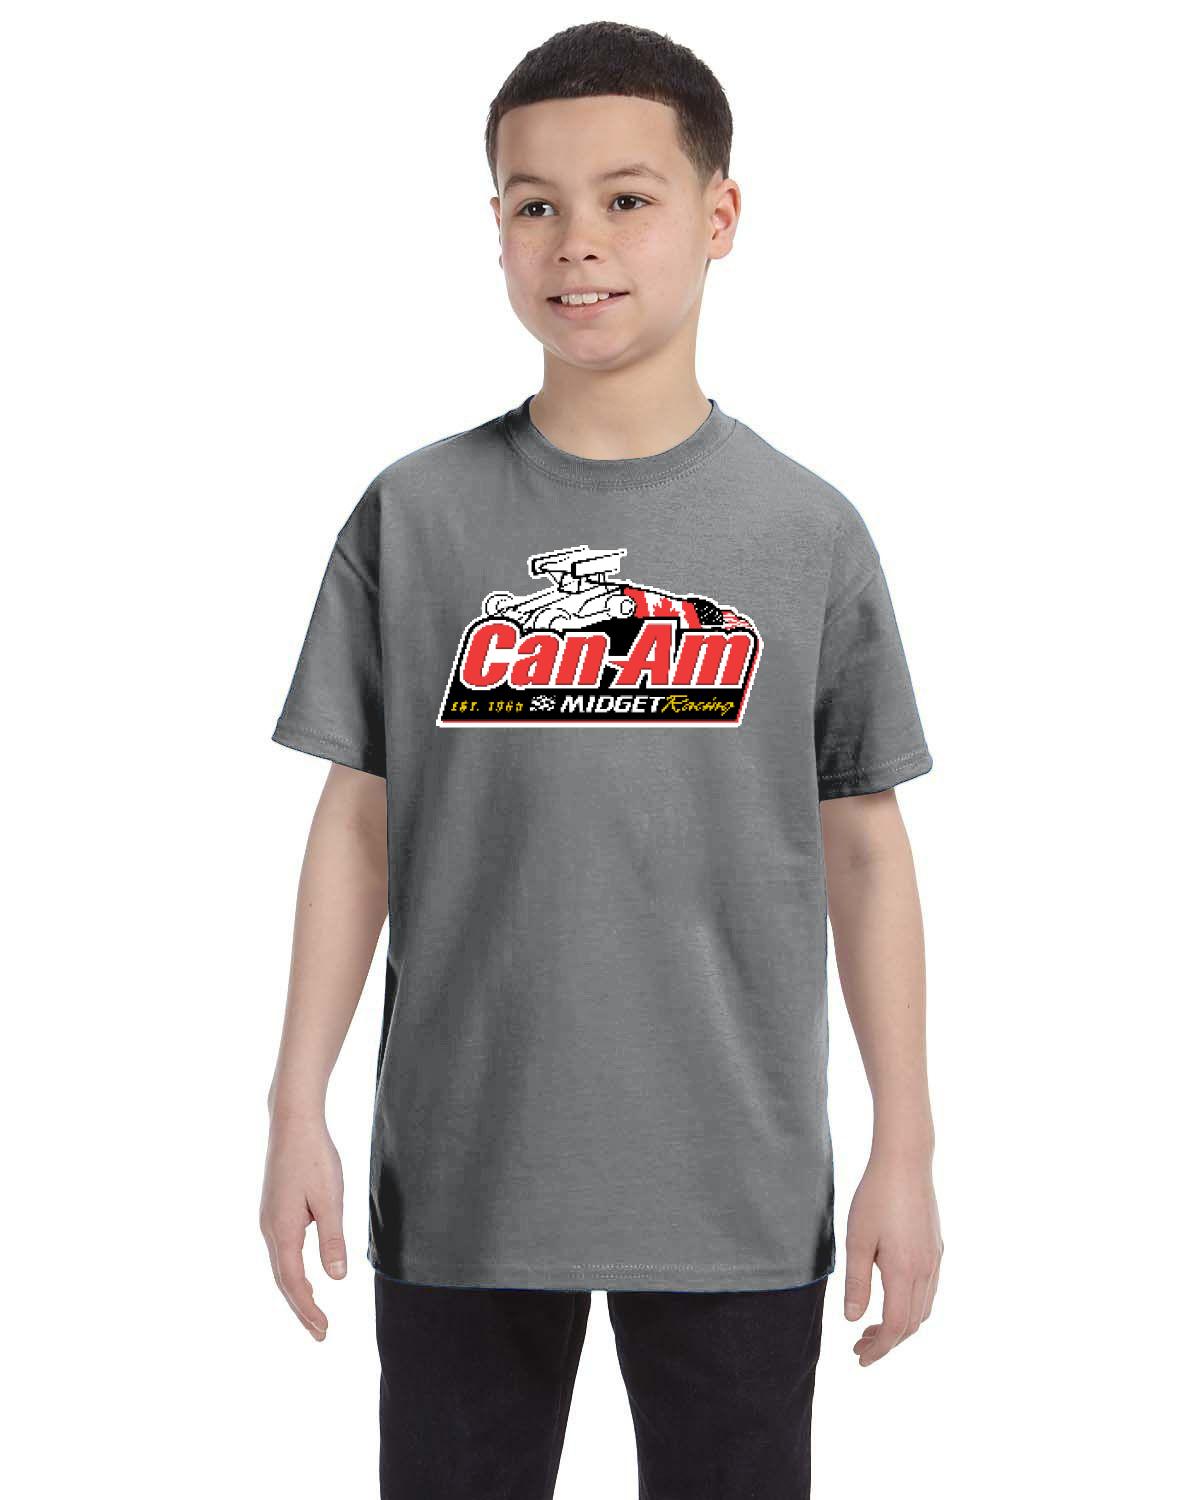 Can Am Midget Racing Kid's T-Shirt